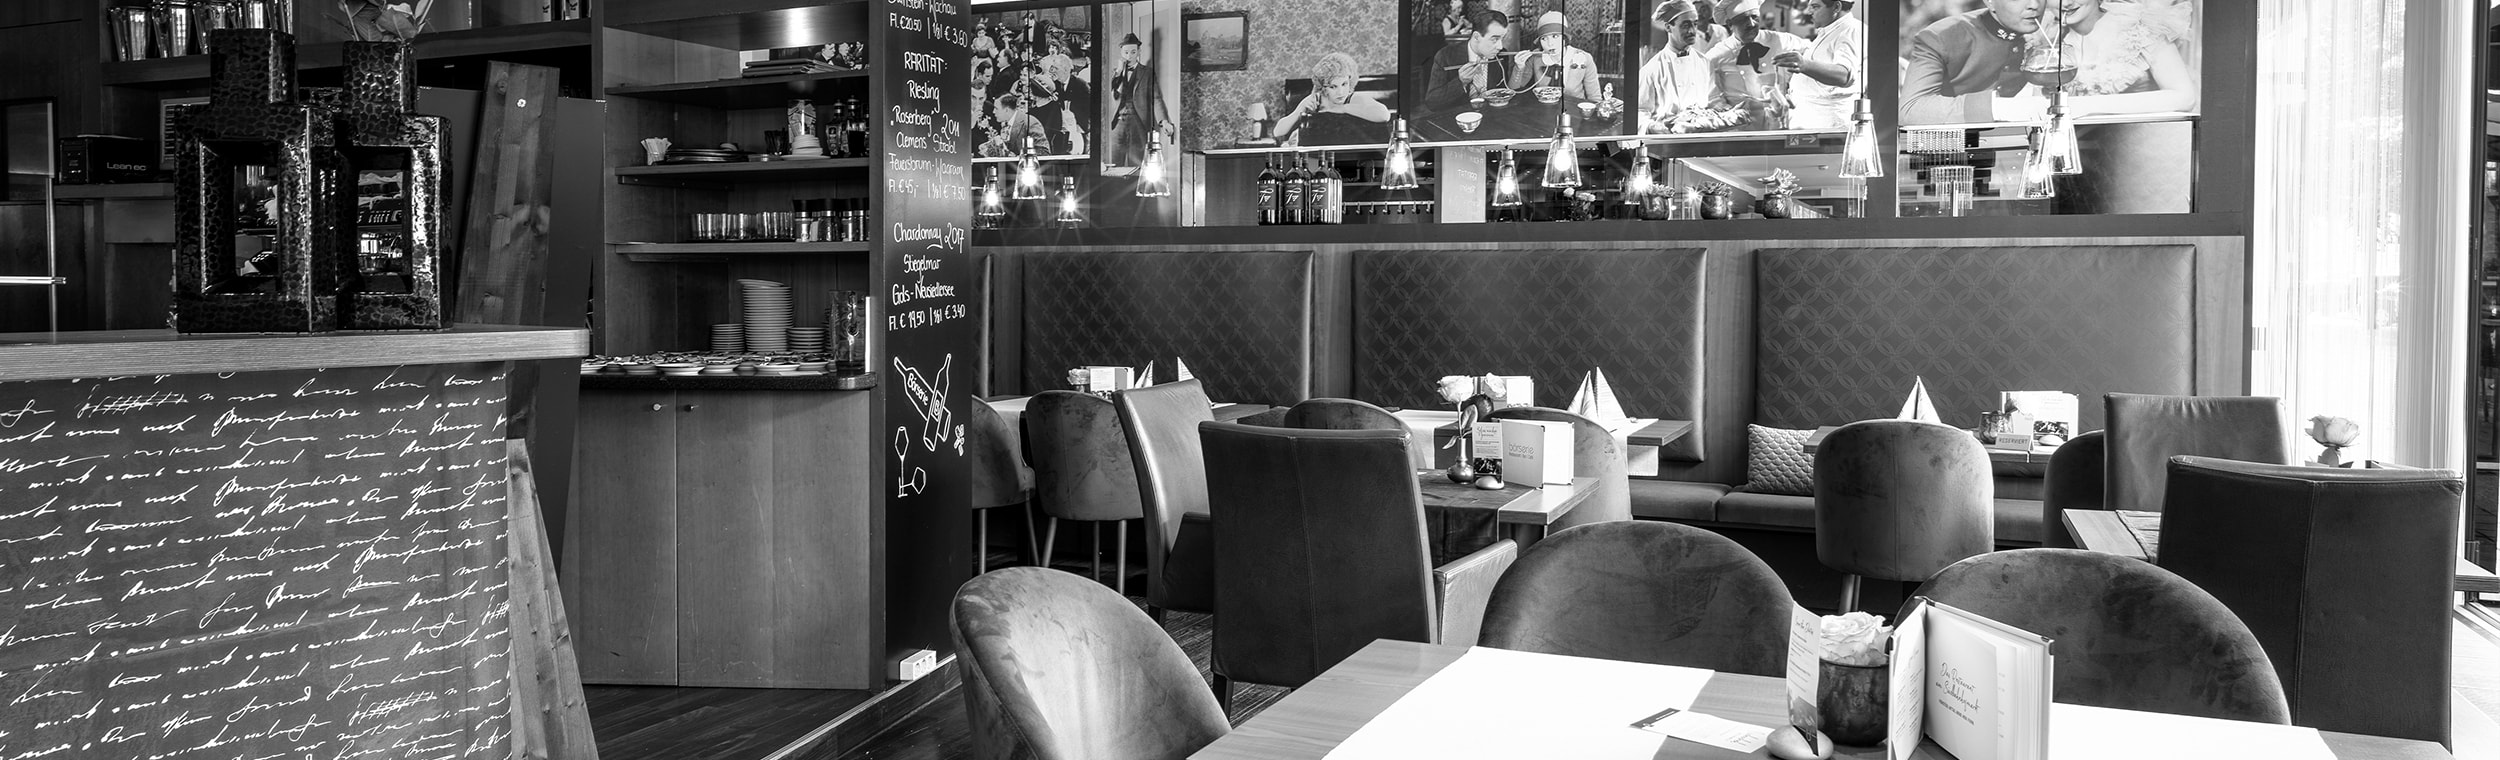 Börserie - der Geheimtipp: Extravagantes Restaurant & Café in Linz